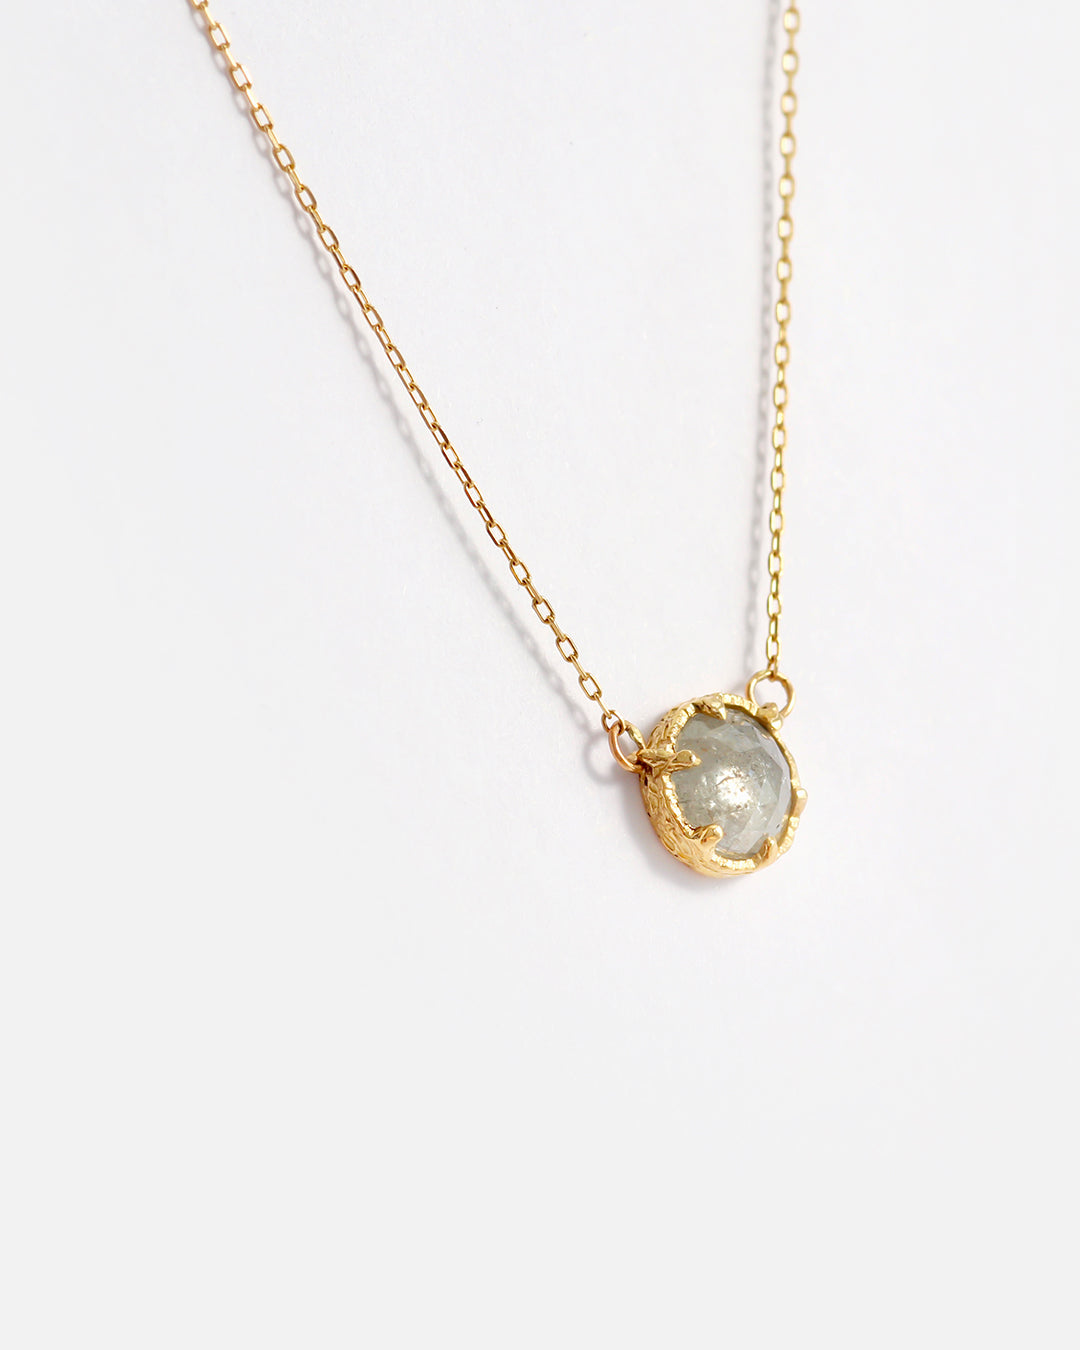 Rose Cut Grey Diamond / Pendant By Ariko in pendants Category